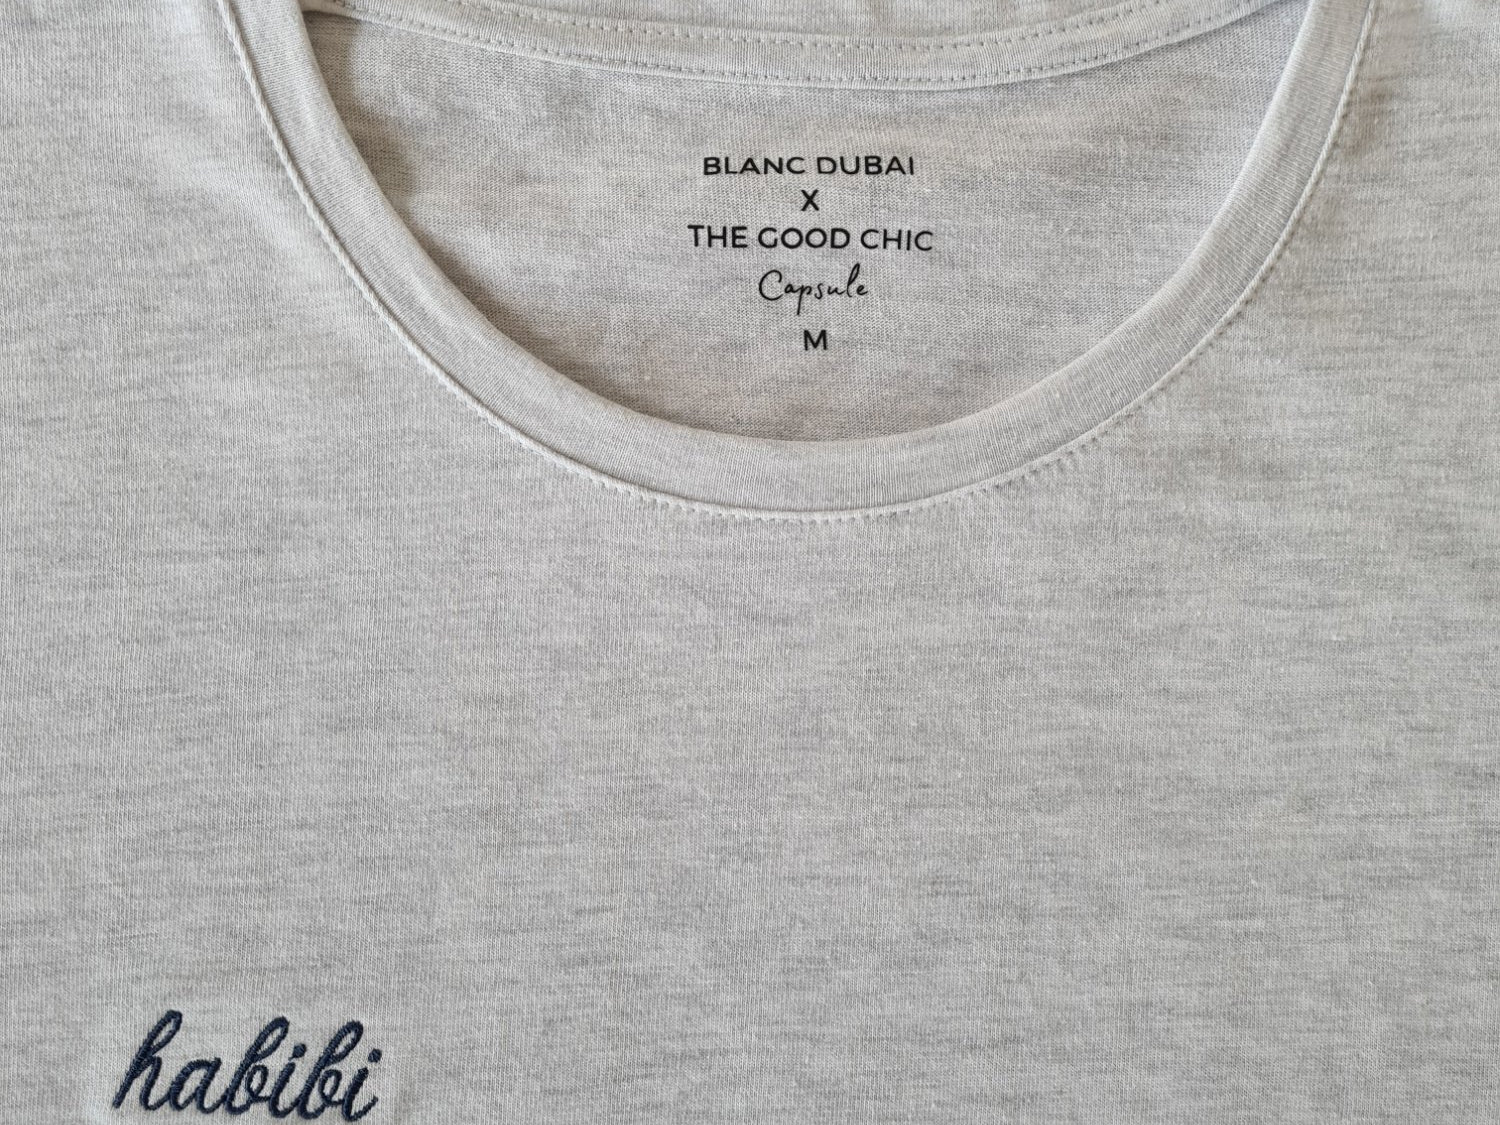 Habibi - T-Shirt collab Blanc Dubai - Light Grey color - The Good Chic